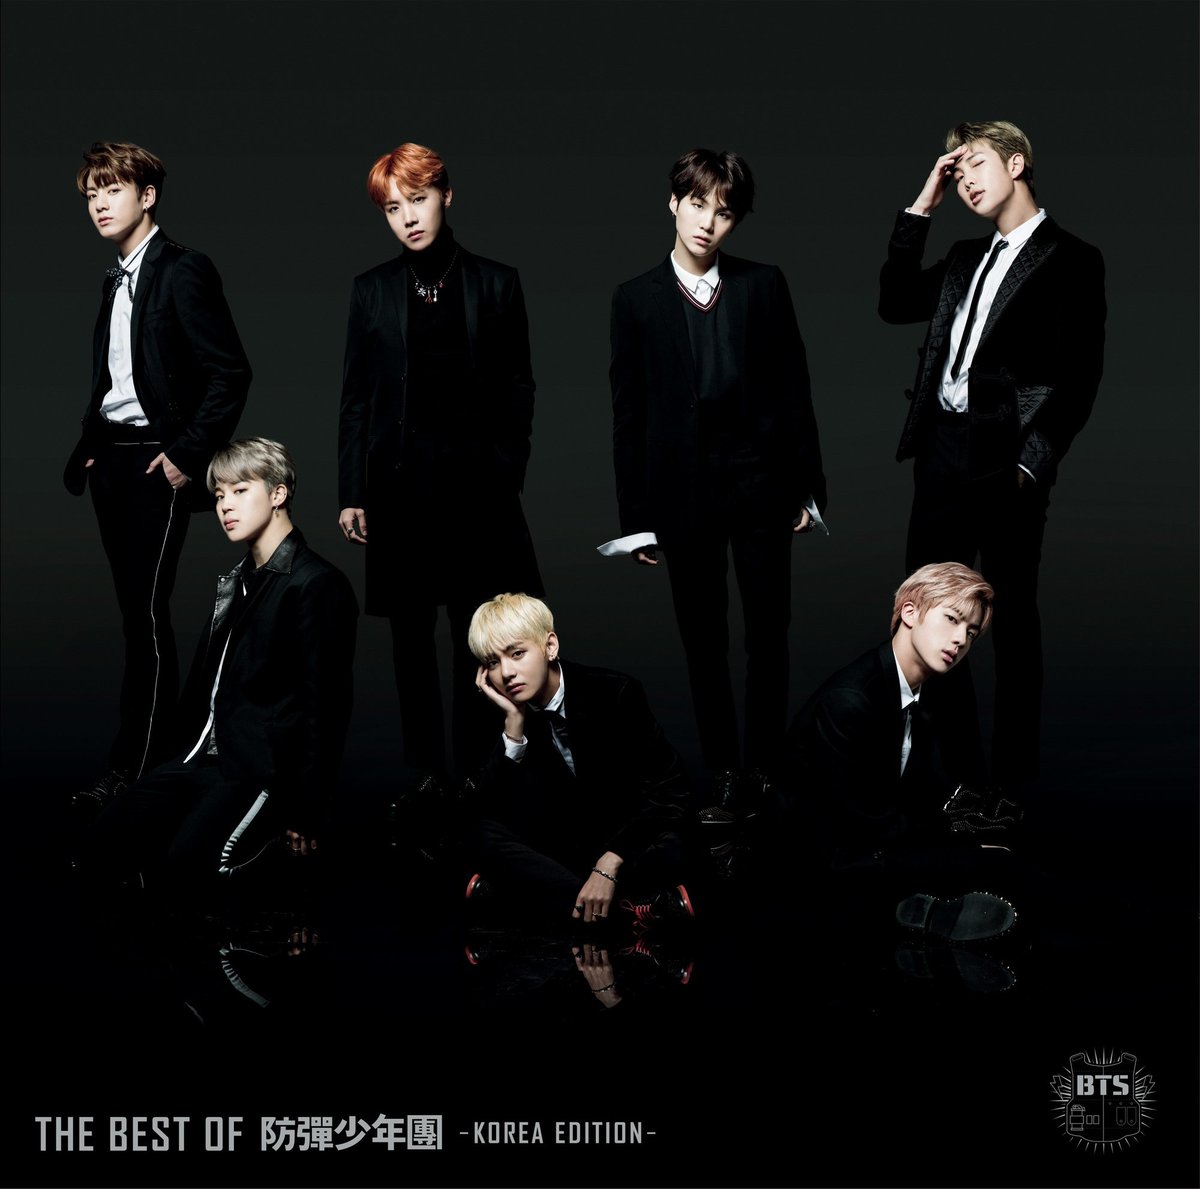 BTS - THE BEST OF 防弾少年団 アートワーク (1 of 2) | Last.fm